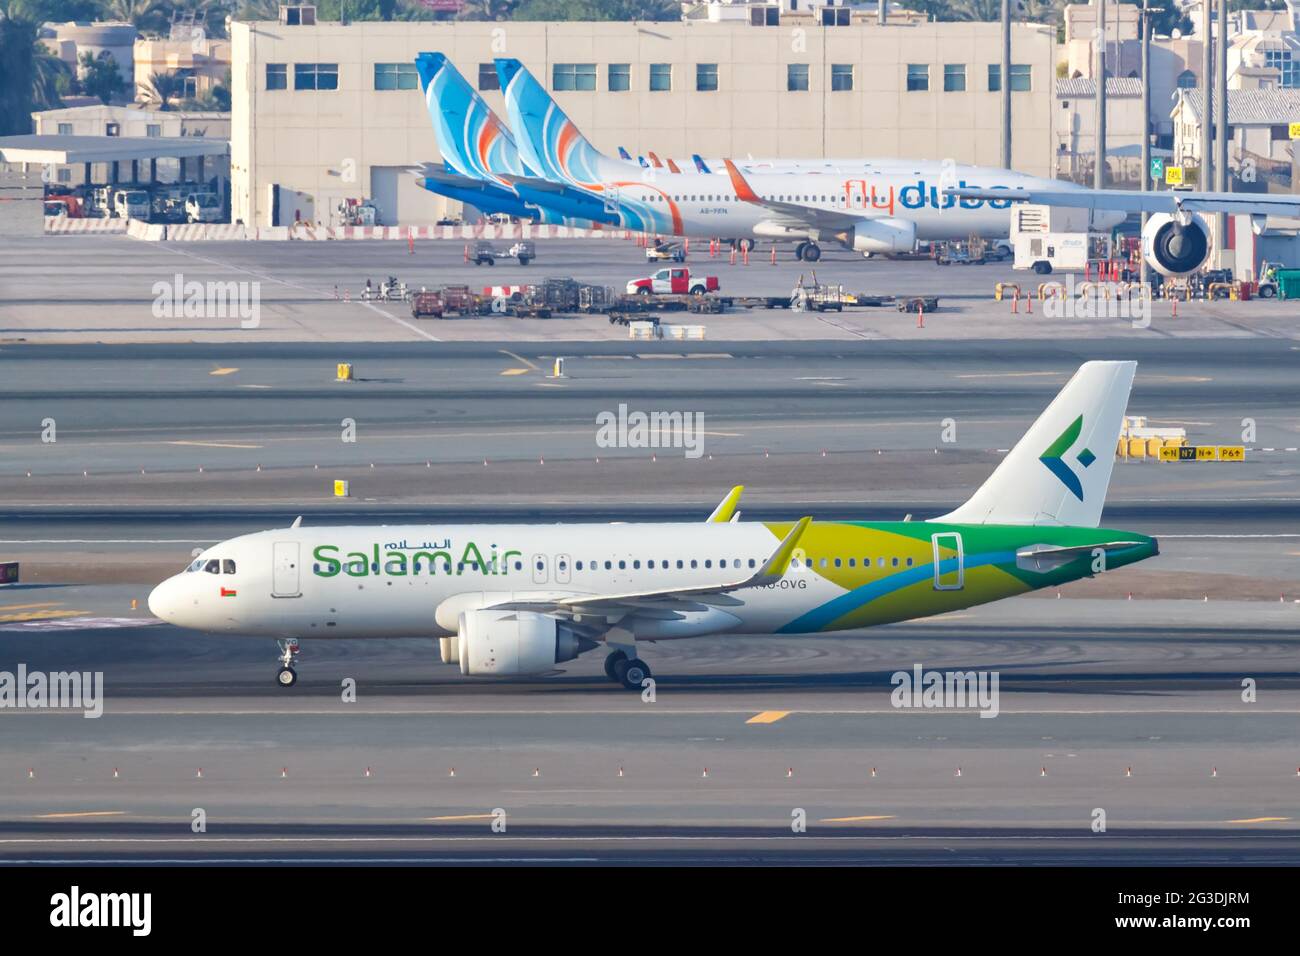 Dubai, United Arab Emirates - May 27, 2021: Salam Air Airbus A320neo airplane at Dubai airport (DXB) in the United Arab Emirates. Stock Photo